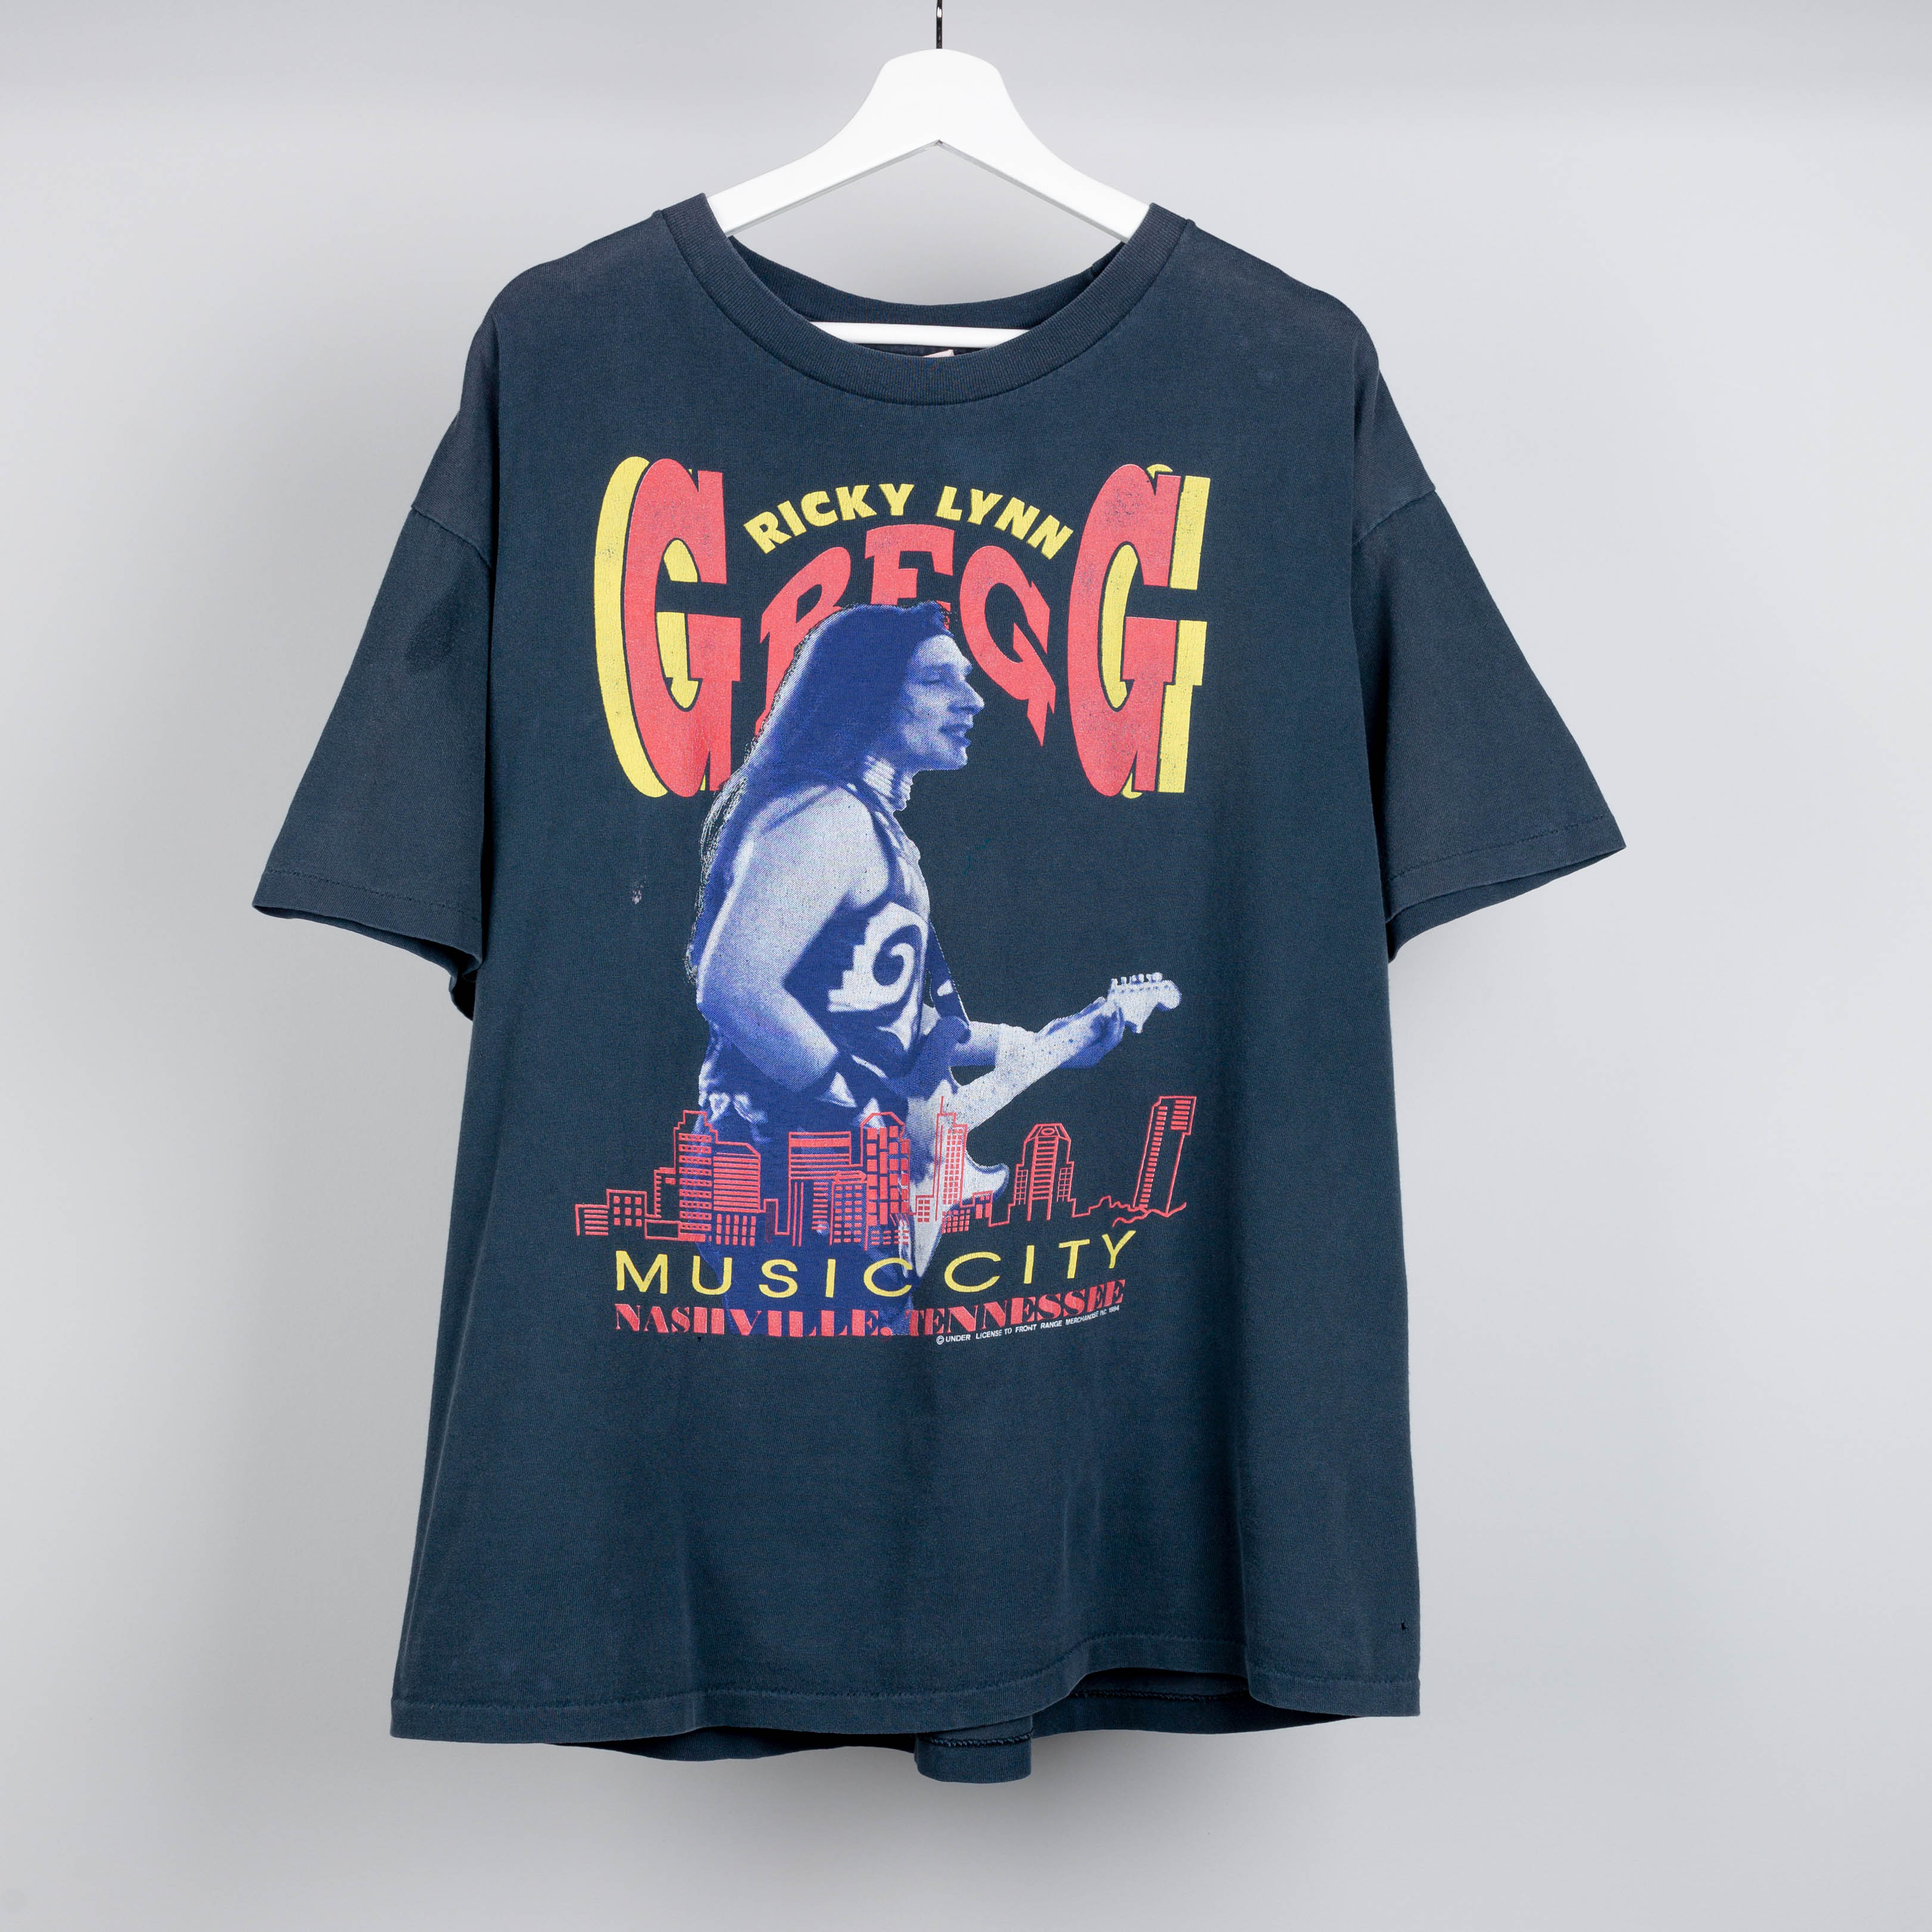 1994 Gregg Ricky Lynn Tour T-Shirt Size X-Large